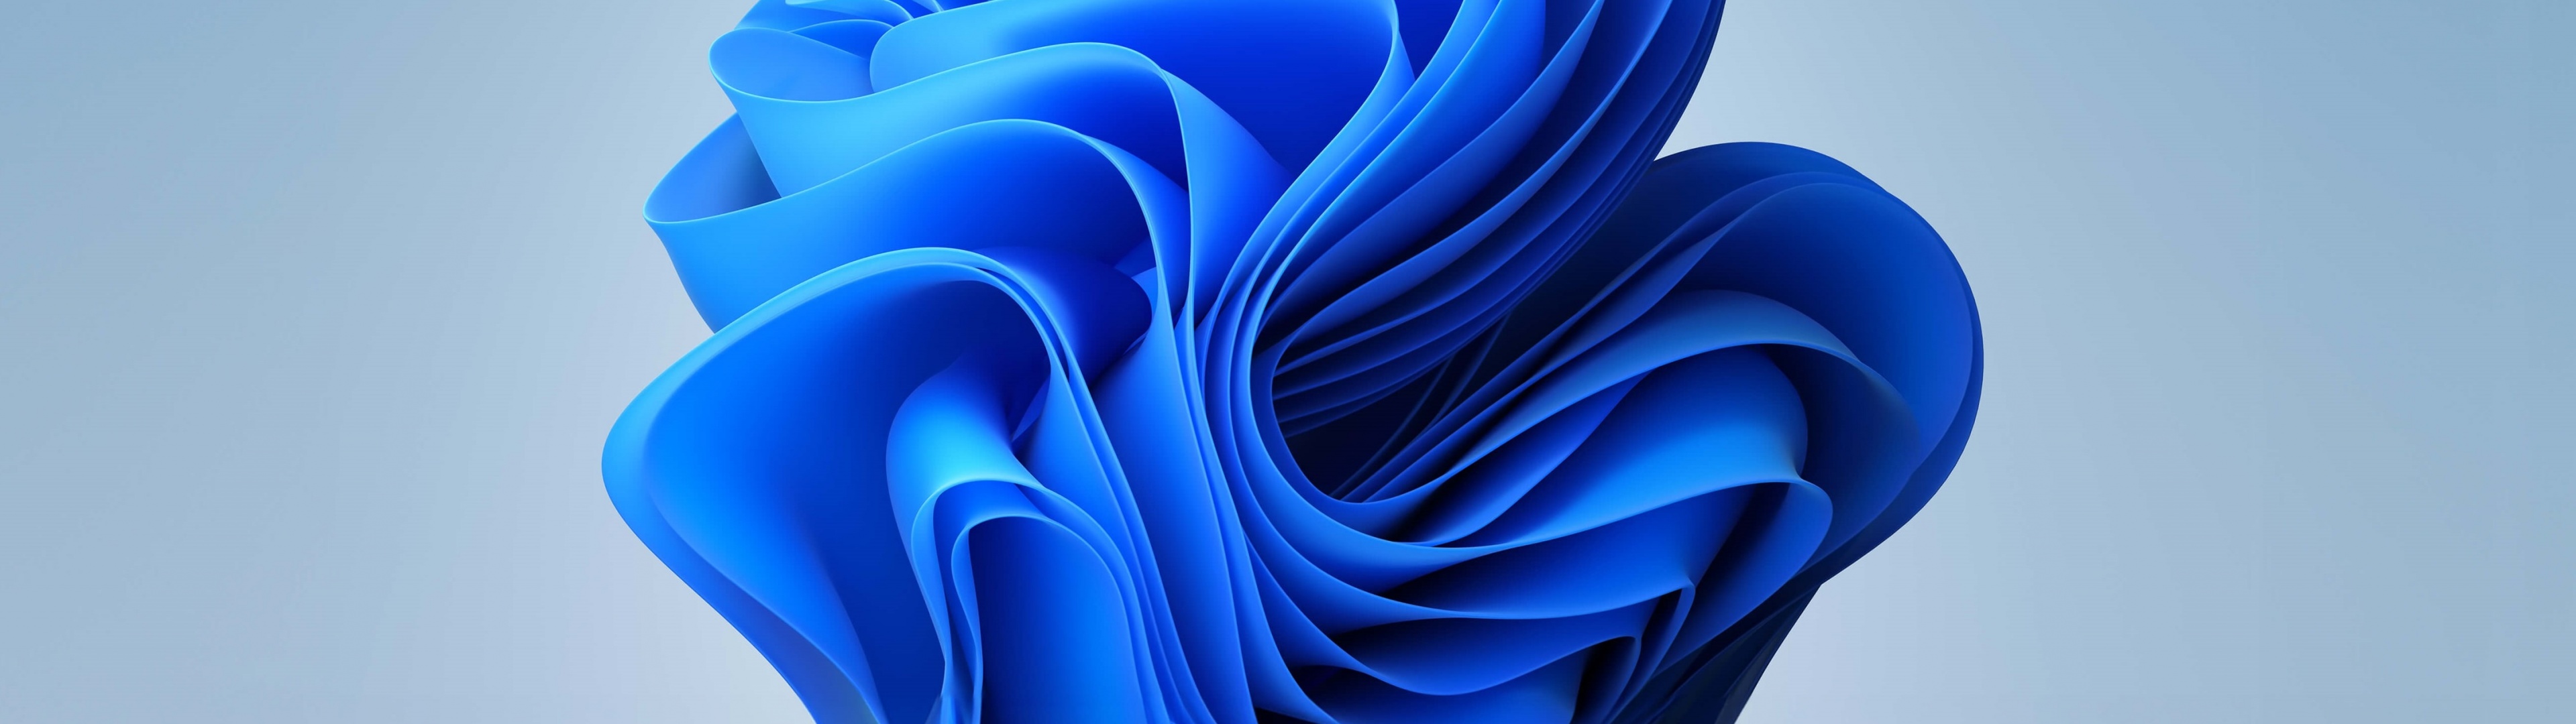 Bloom Wallpaper 4K, Windows 11, Blue aesthetic